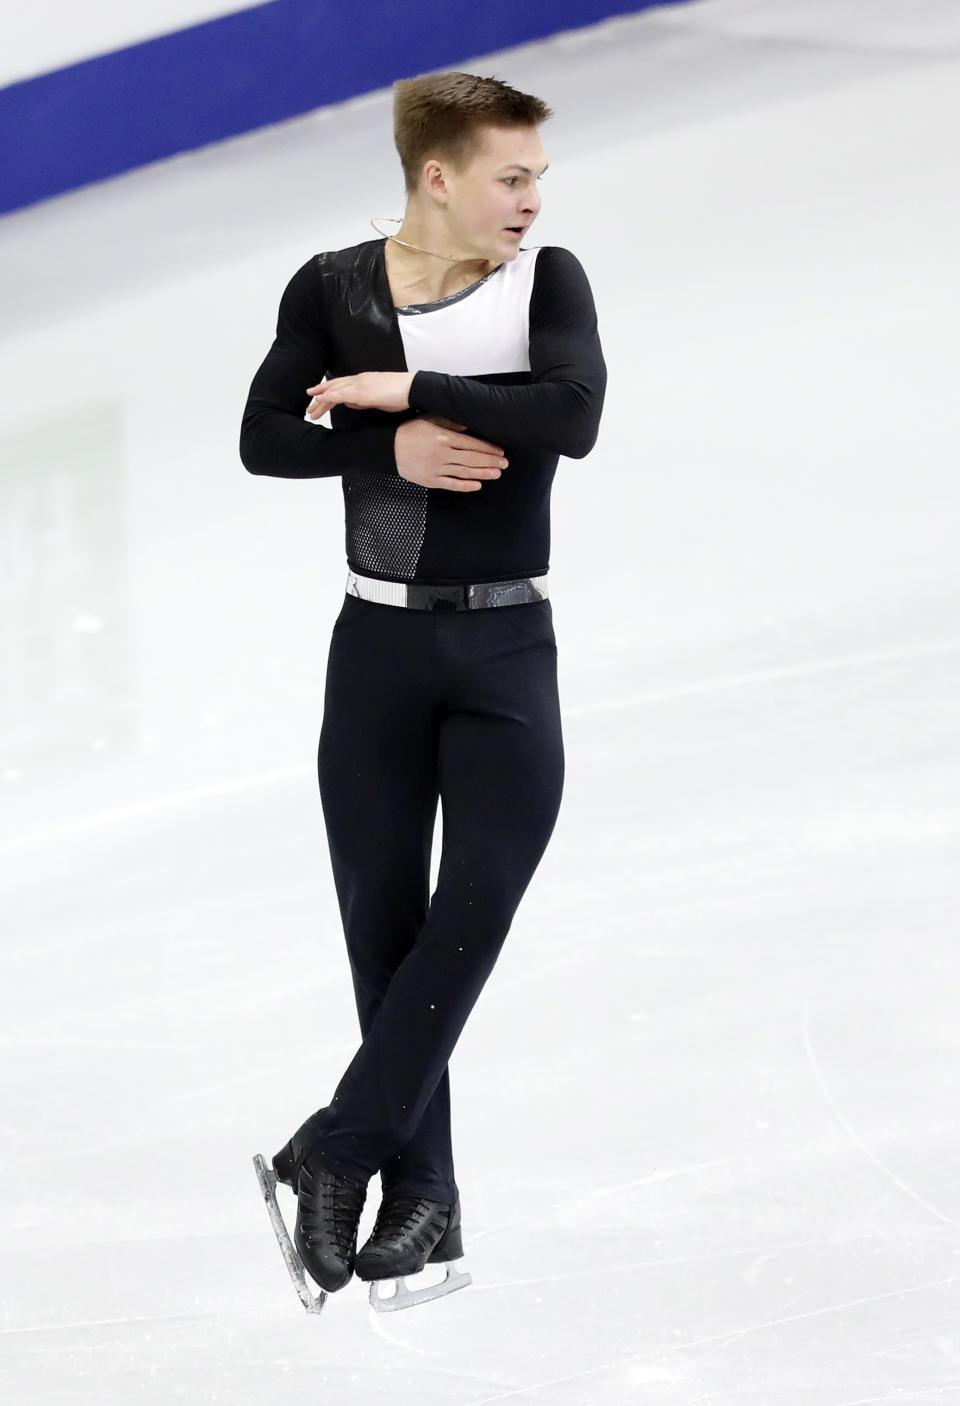 Russia's Mikhail Kolyada performs in the men's short program at the ISU European figure skating championships in Minsk, Belarus, Thursday, Jan. 24, 2019. (AP Photo/Sergei Grits)